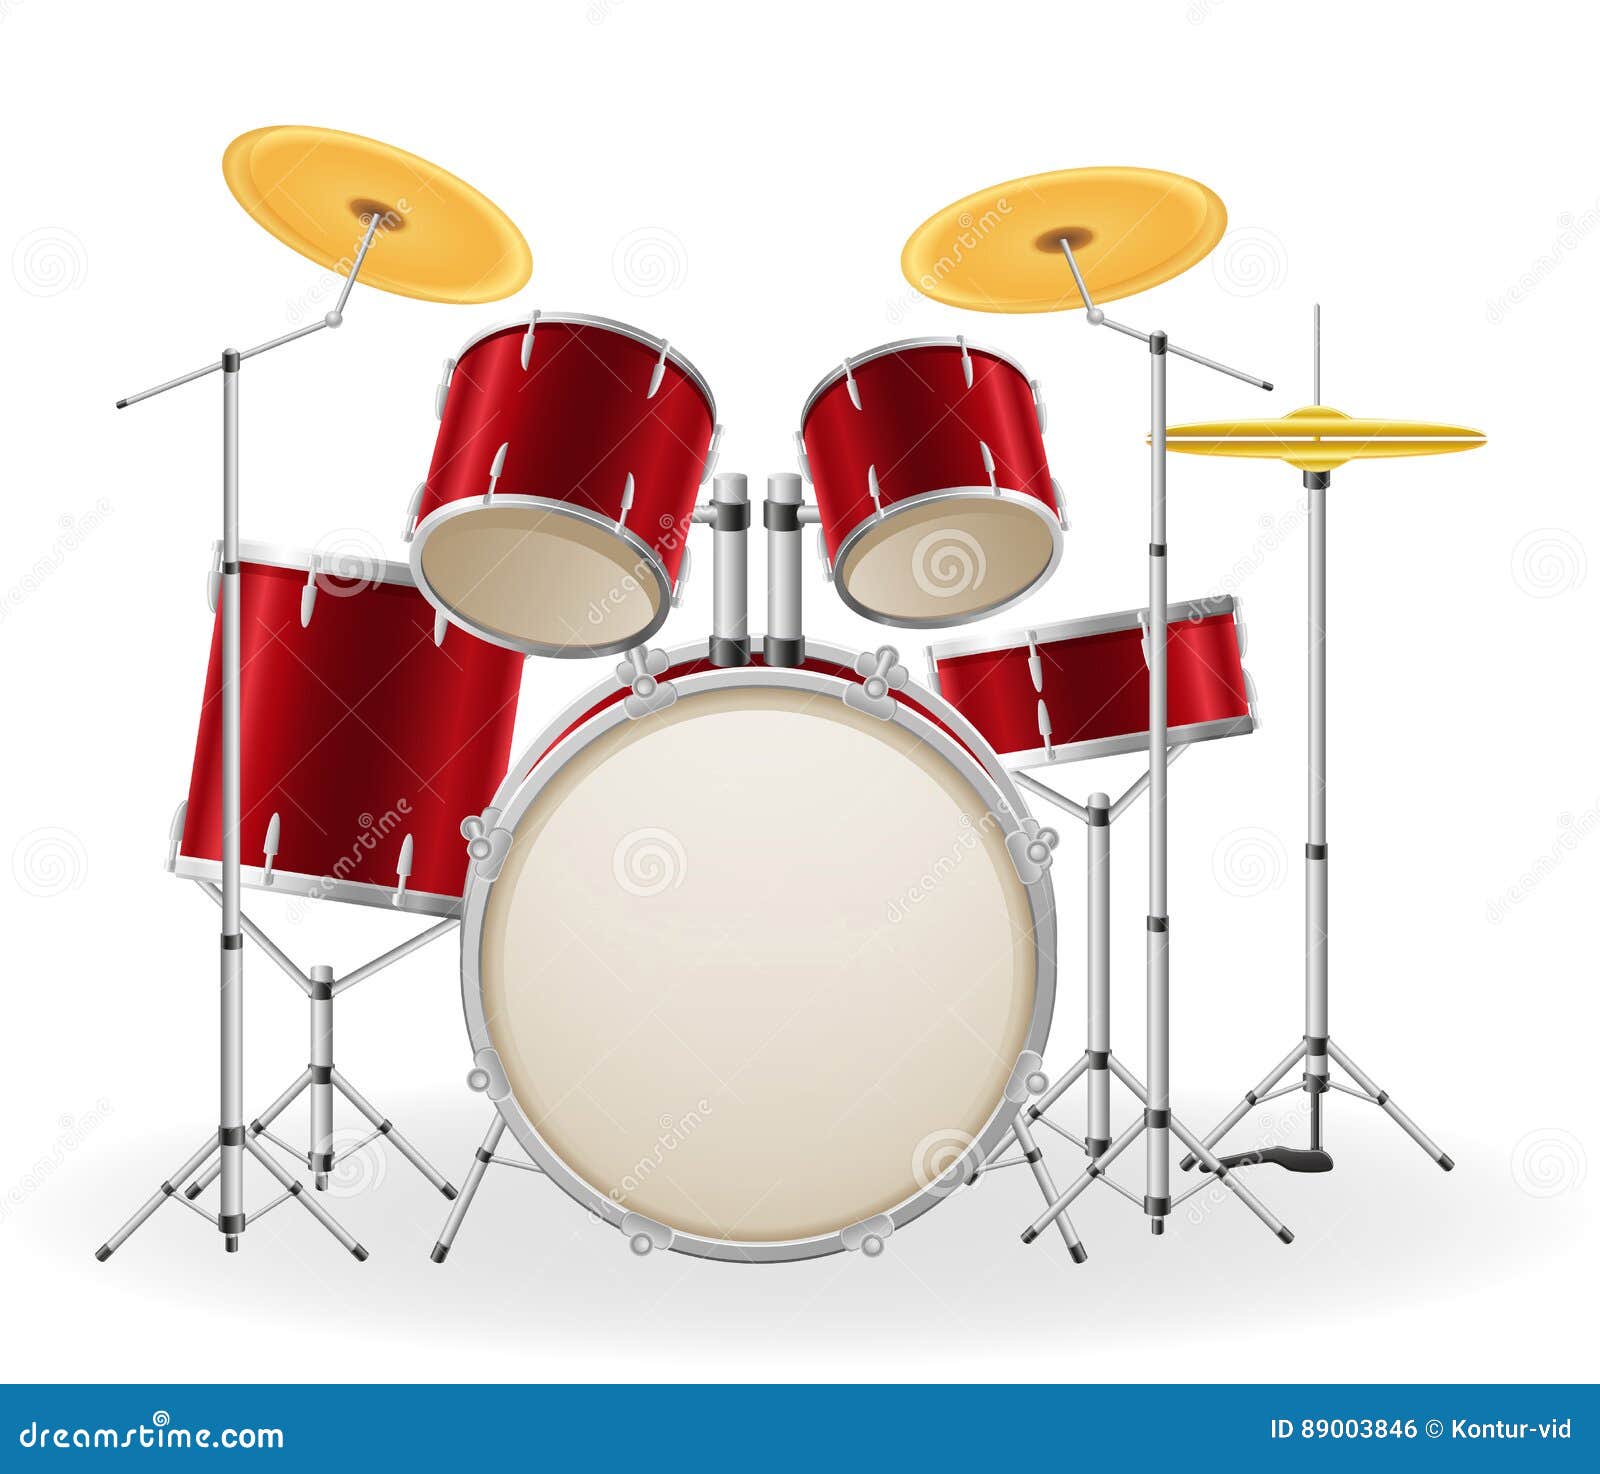 drum set kit musical instruments stock  